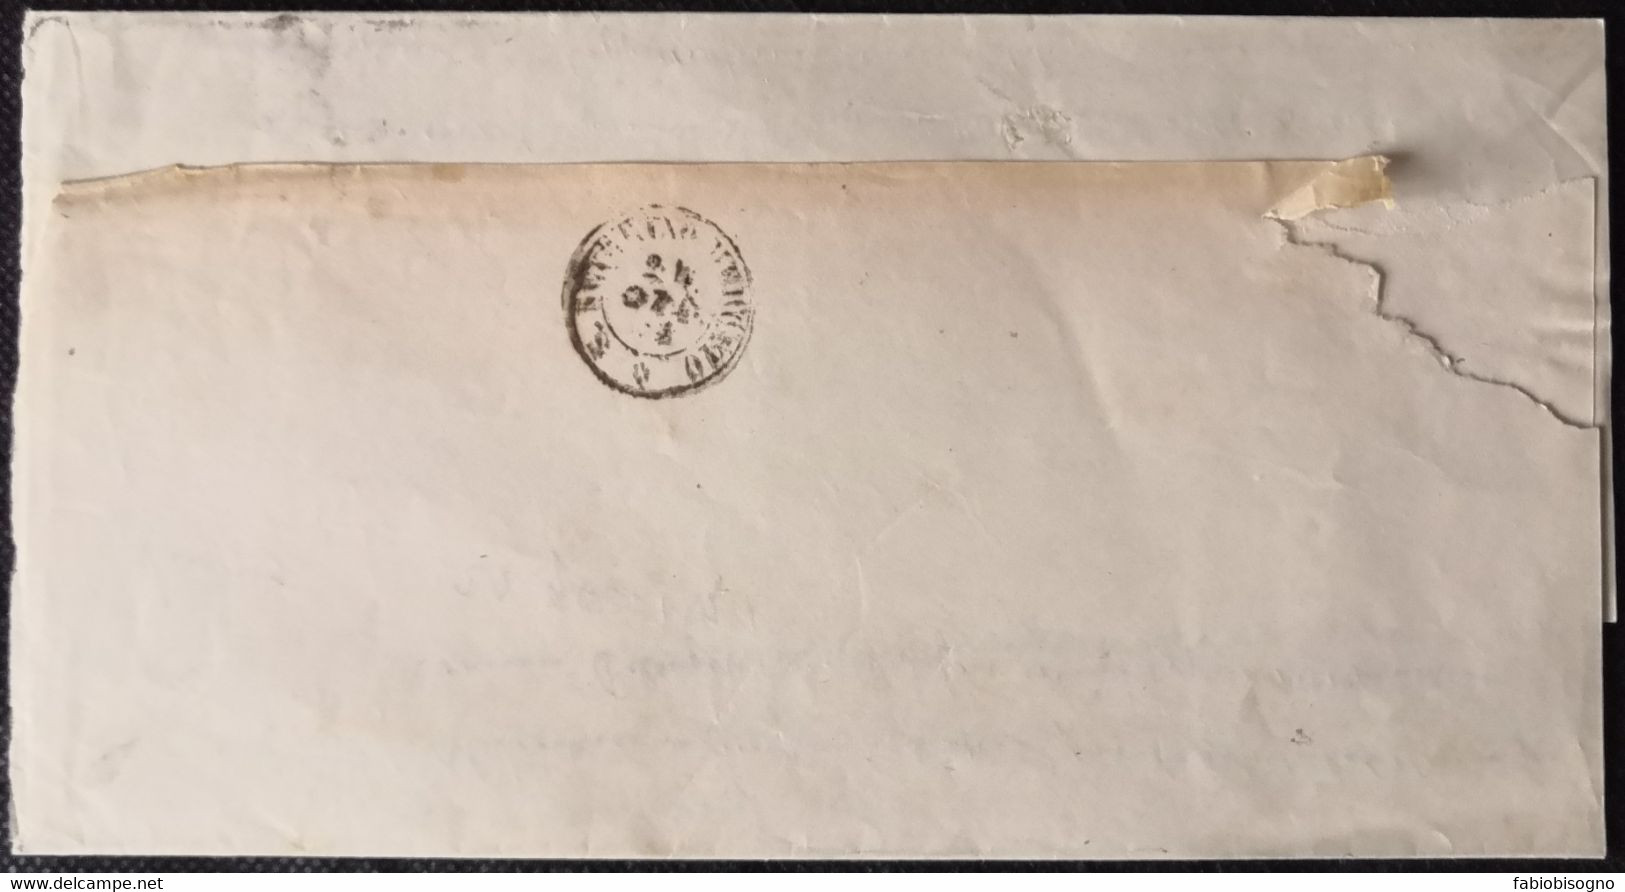 Salerno 2.6.1876 - Francobollo Di Stato 0,20 Corrispondenza In Franchigia - Service